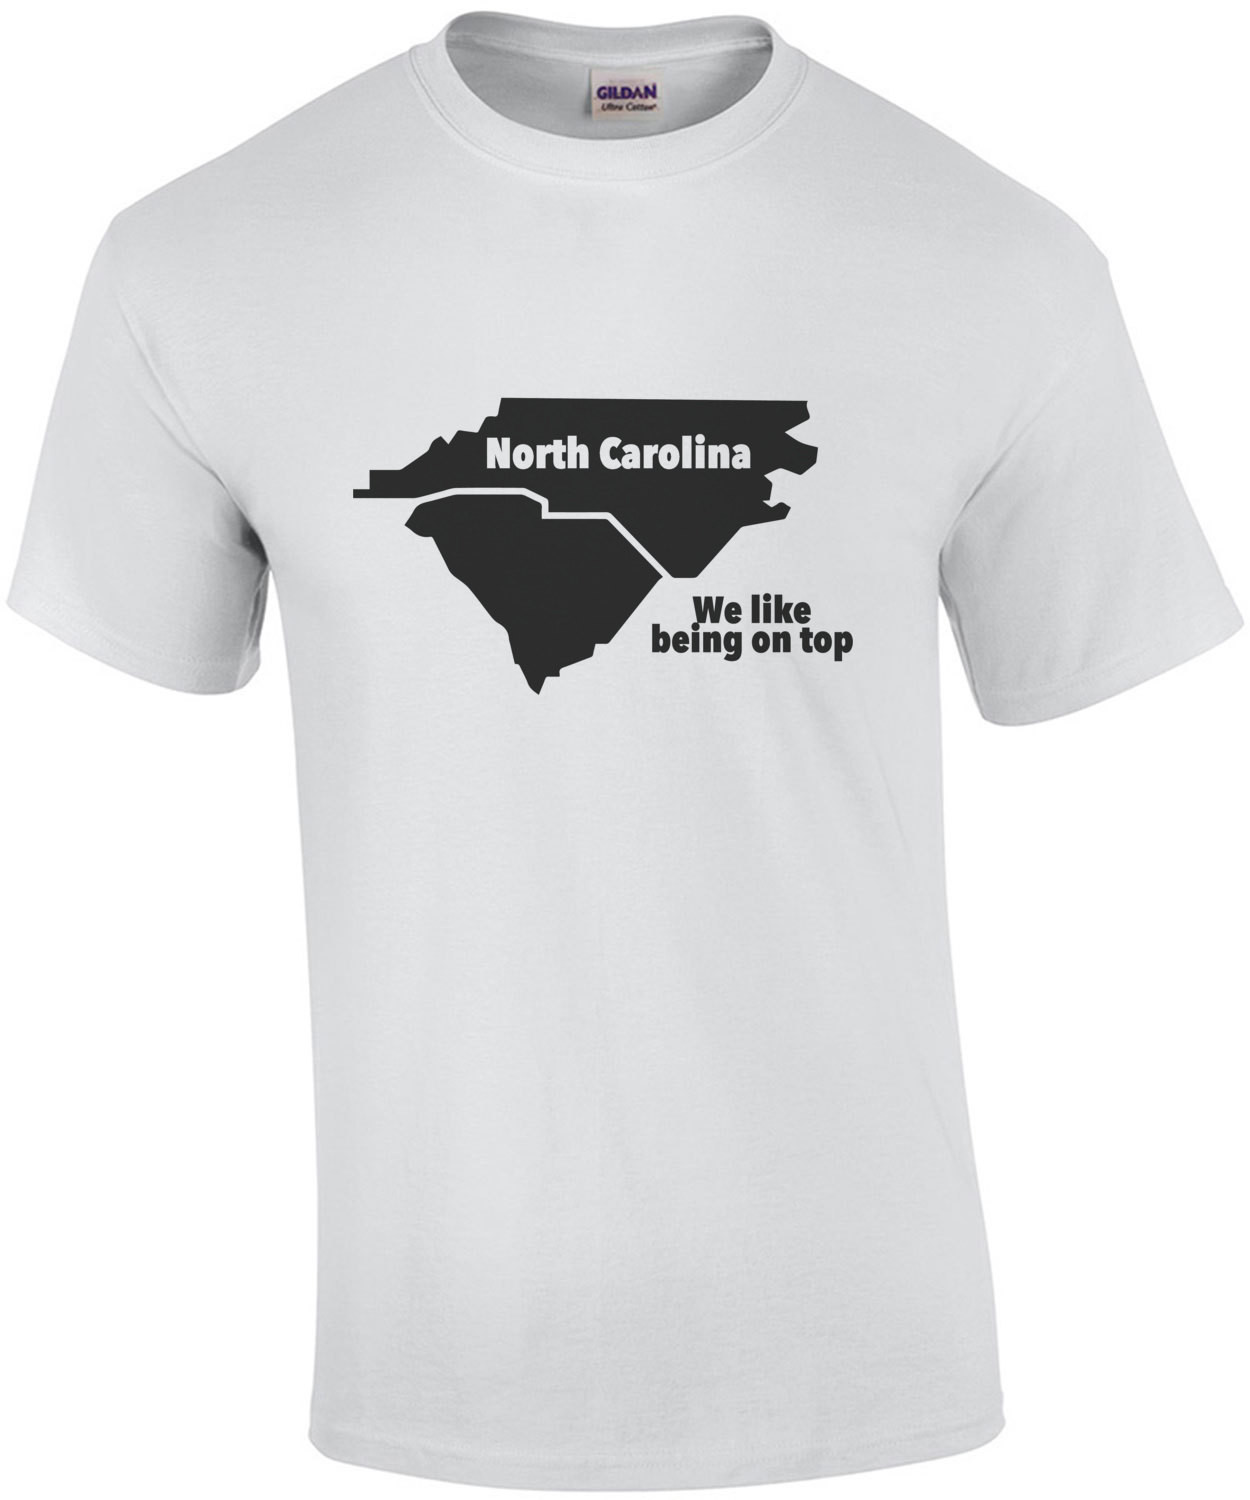 North Carolina - We like being on top - North Carolina T-Shirt